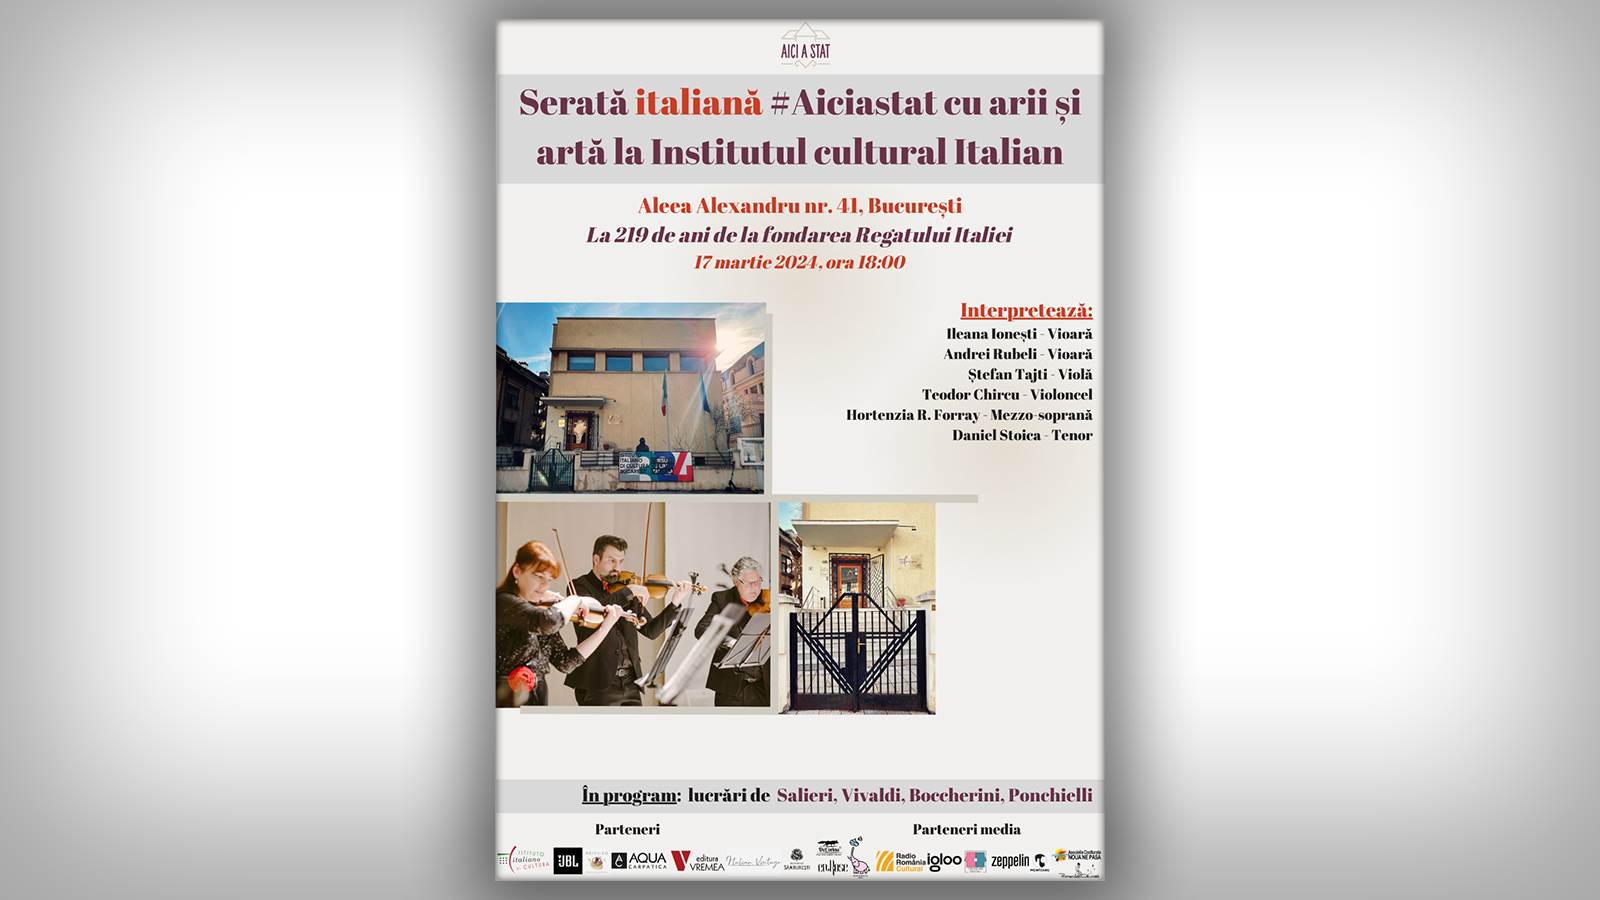 Serata italiana #Aiciastat cu arii si arta la Institutul Cultural Italian